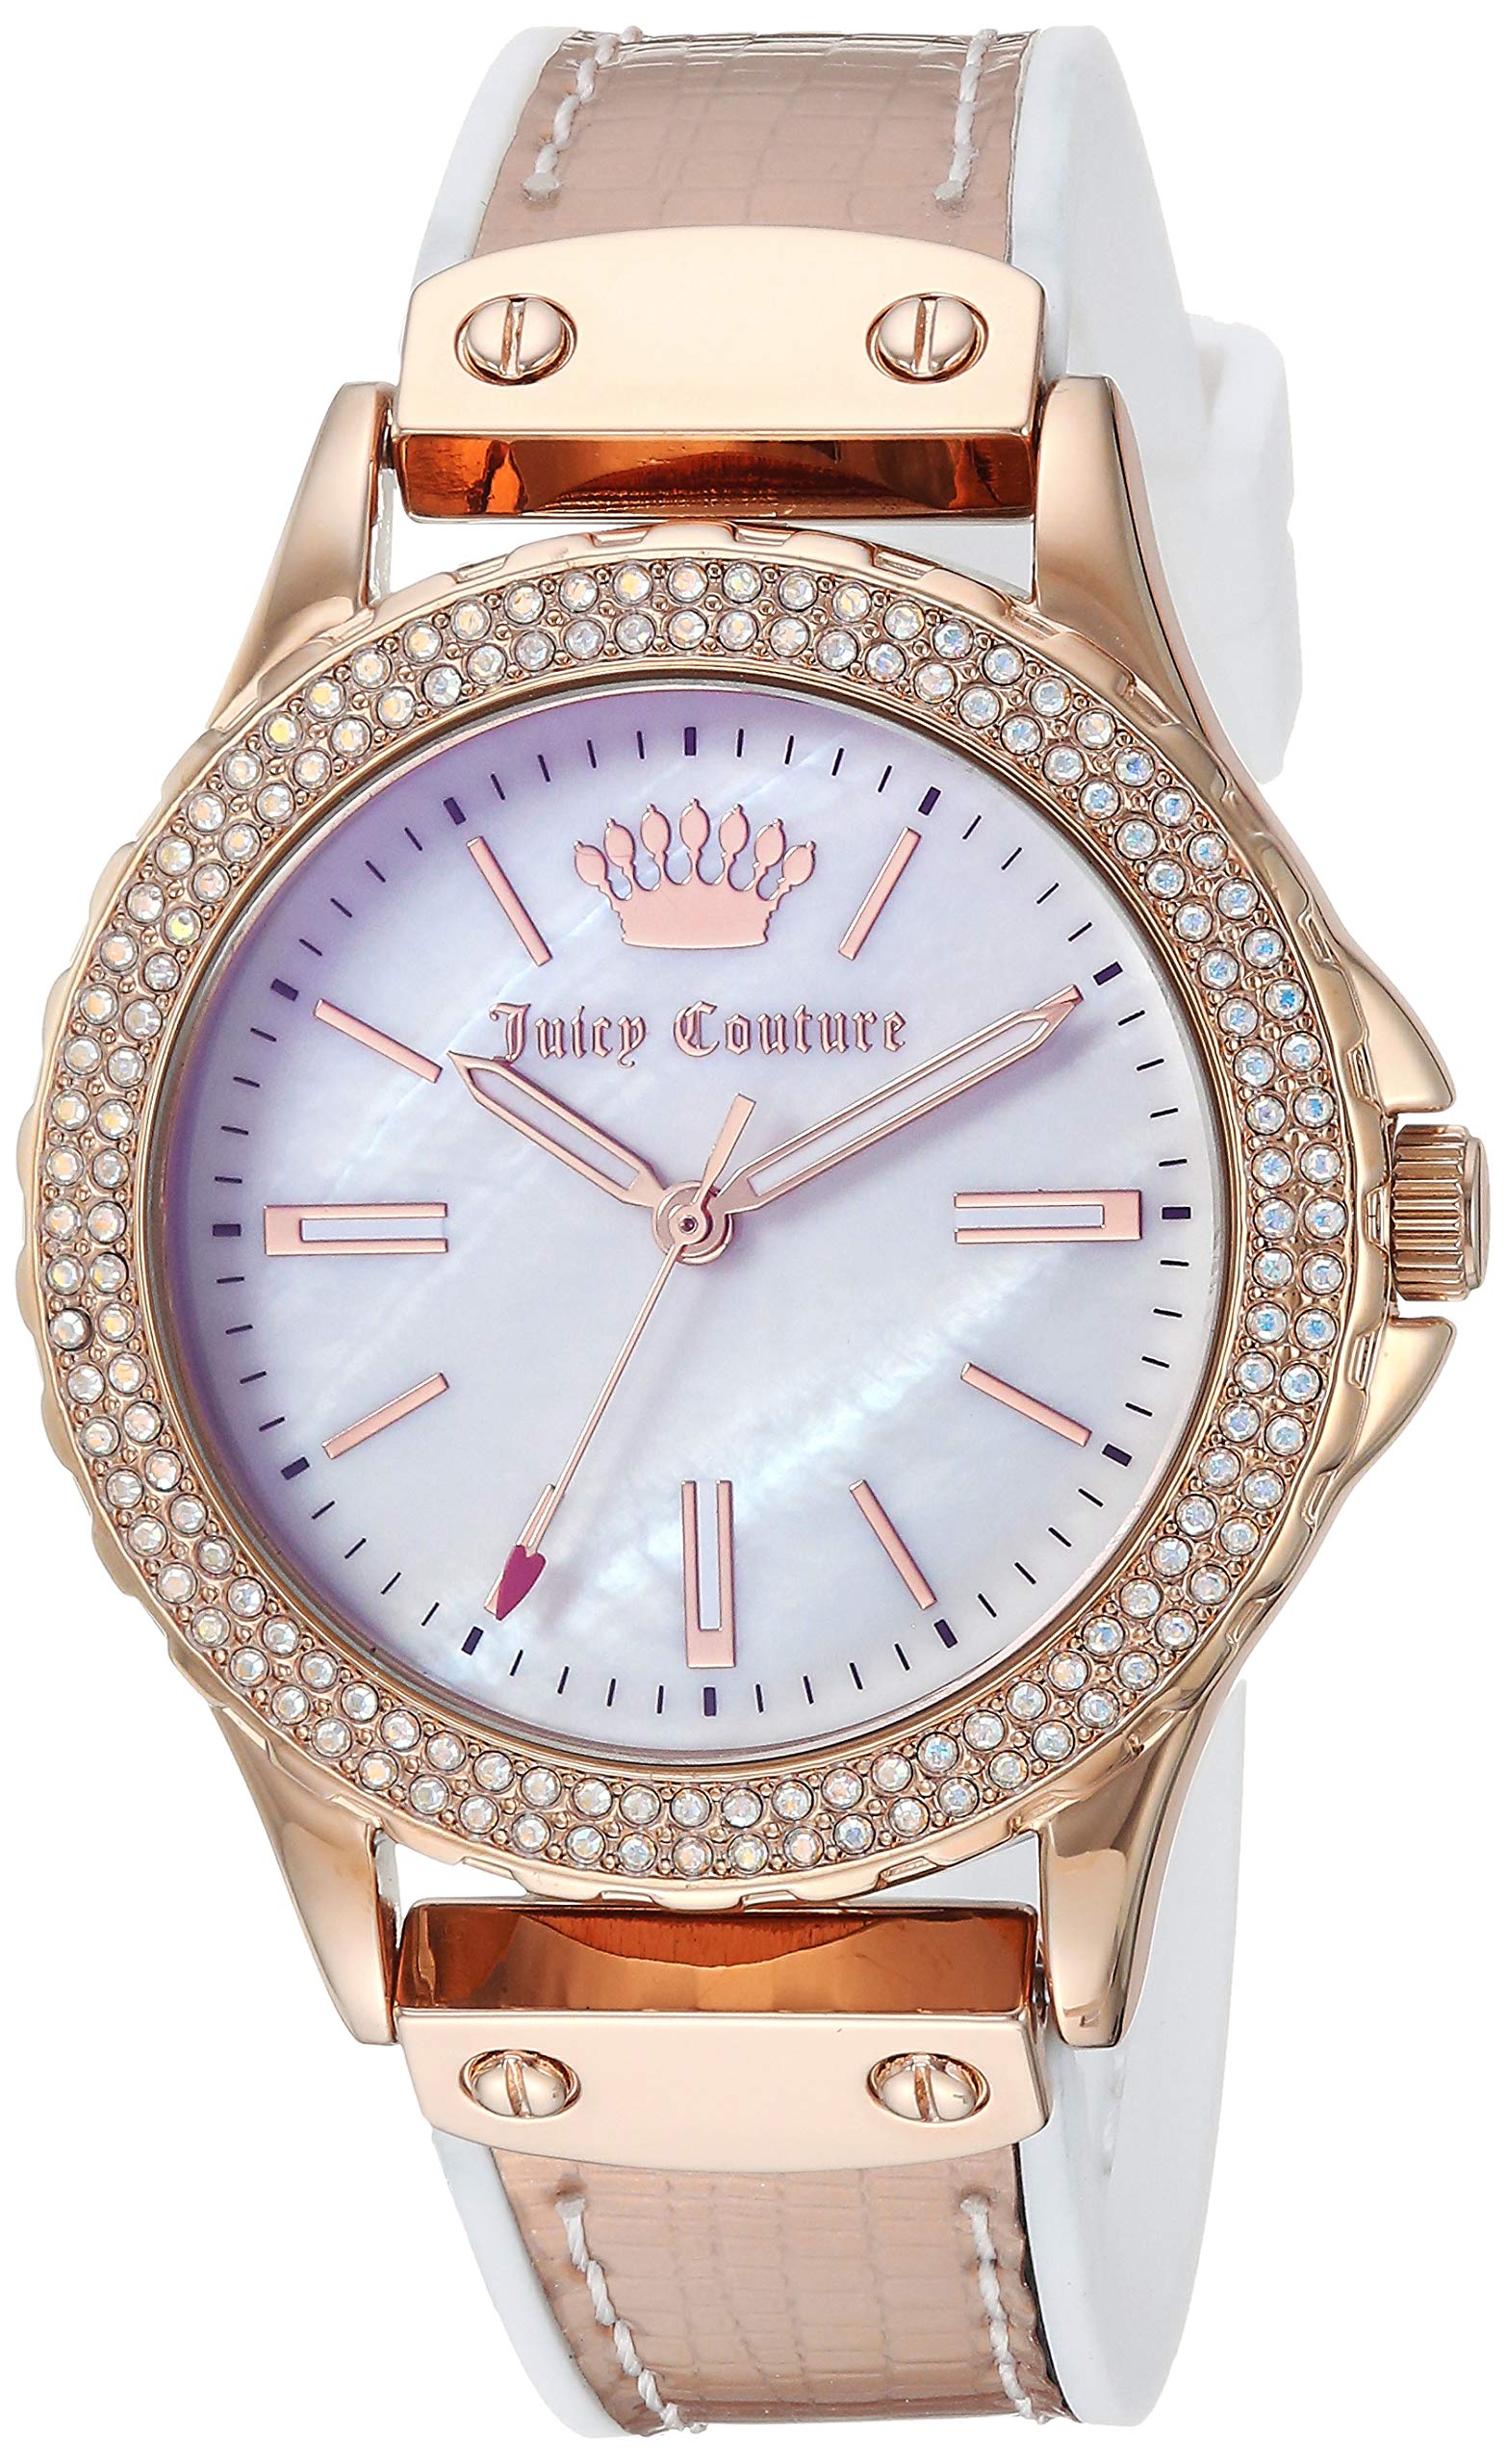 Juicy Couture Bracelet Watch for Sale in San Antonio, TX - OfferUp